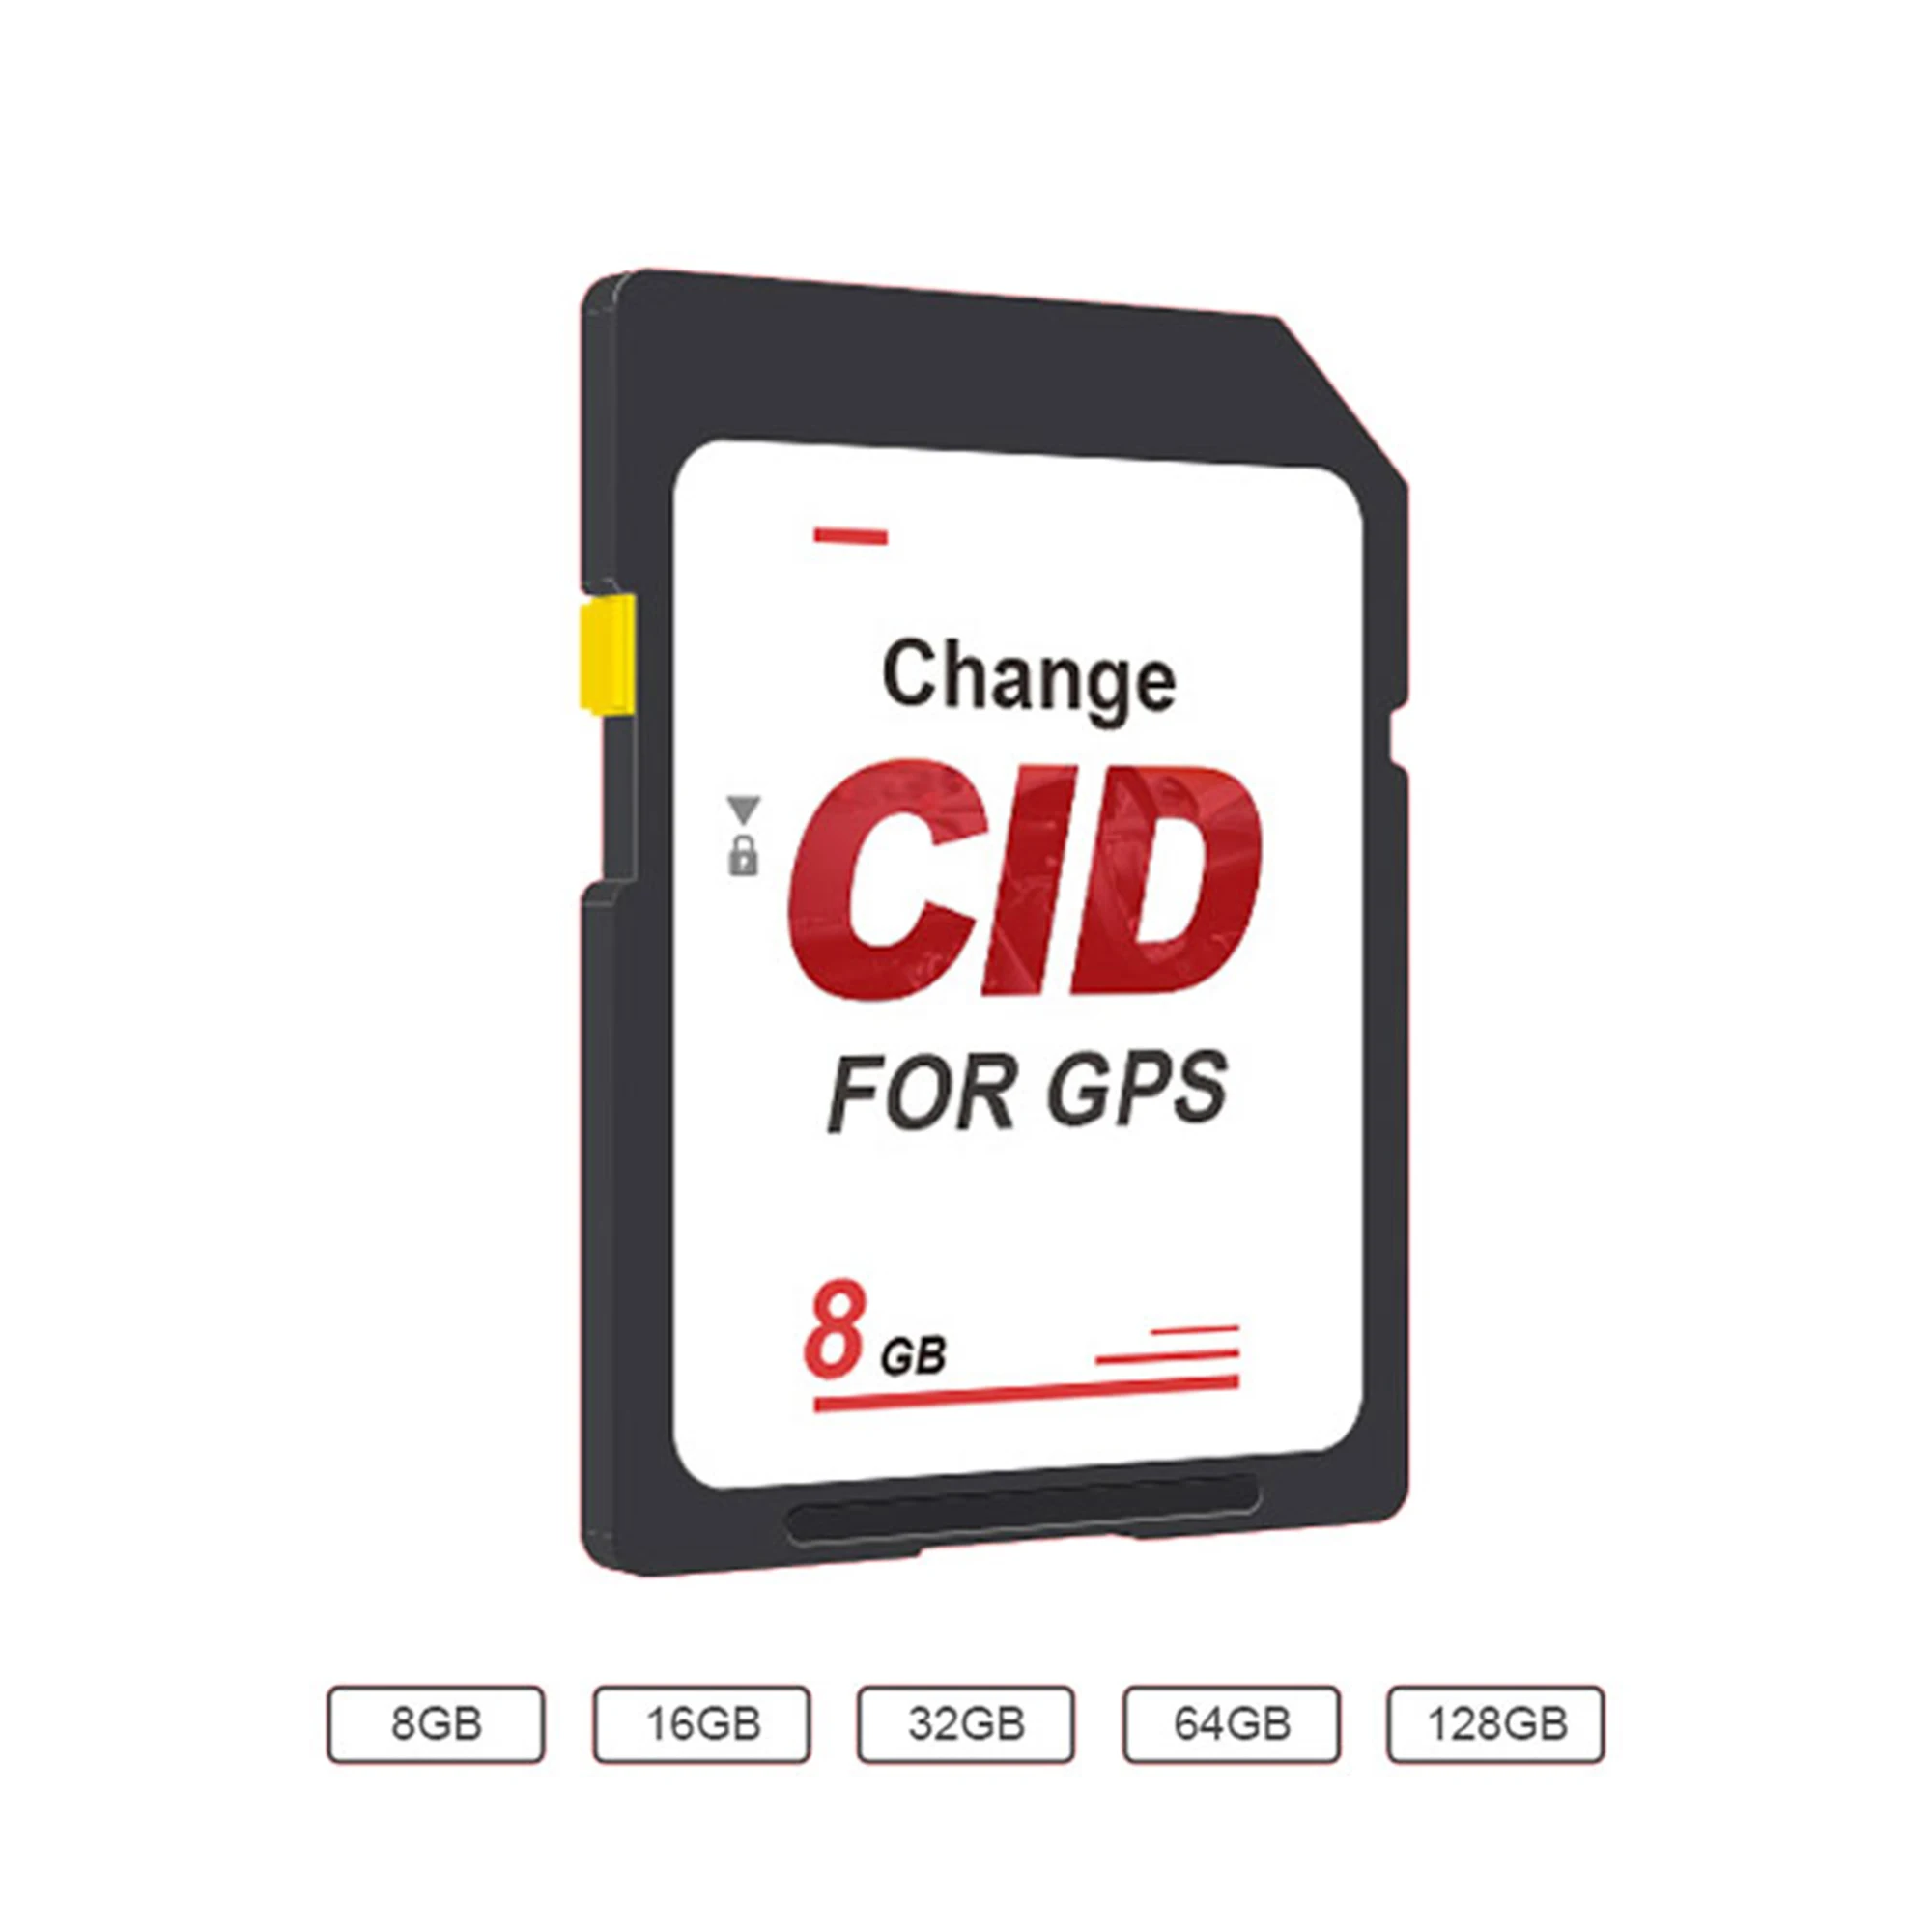 cid sd card change